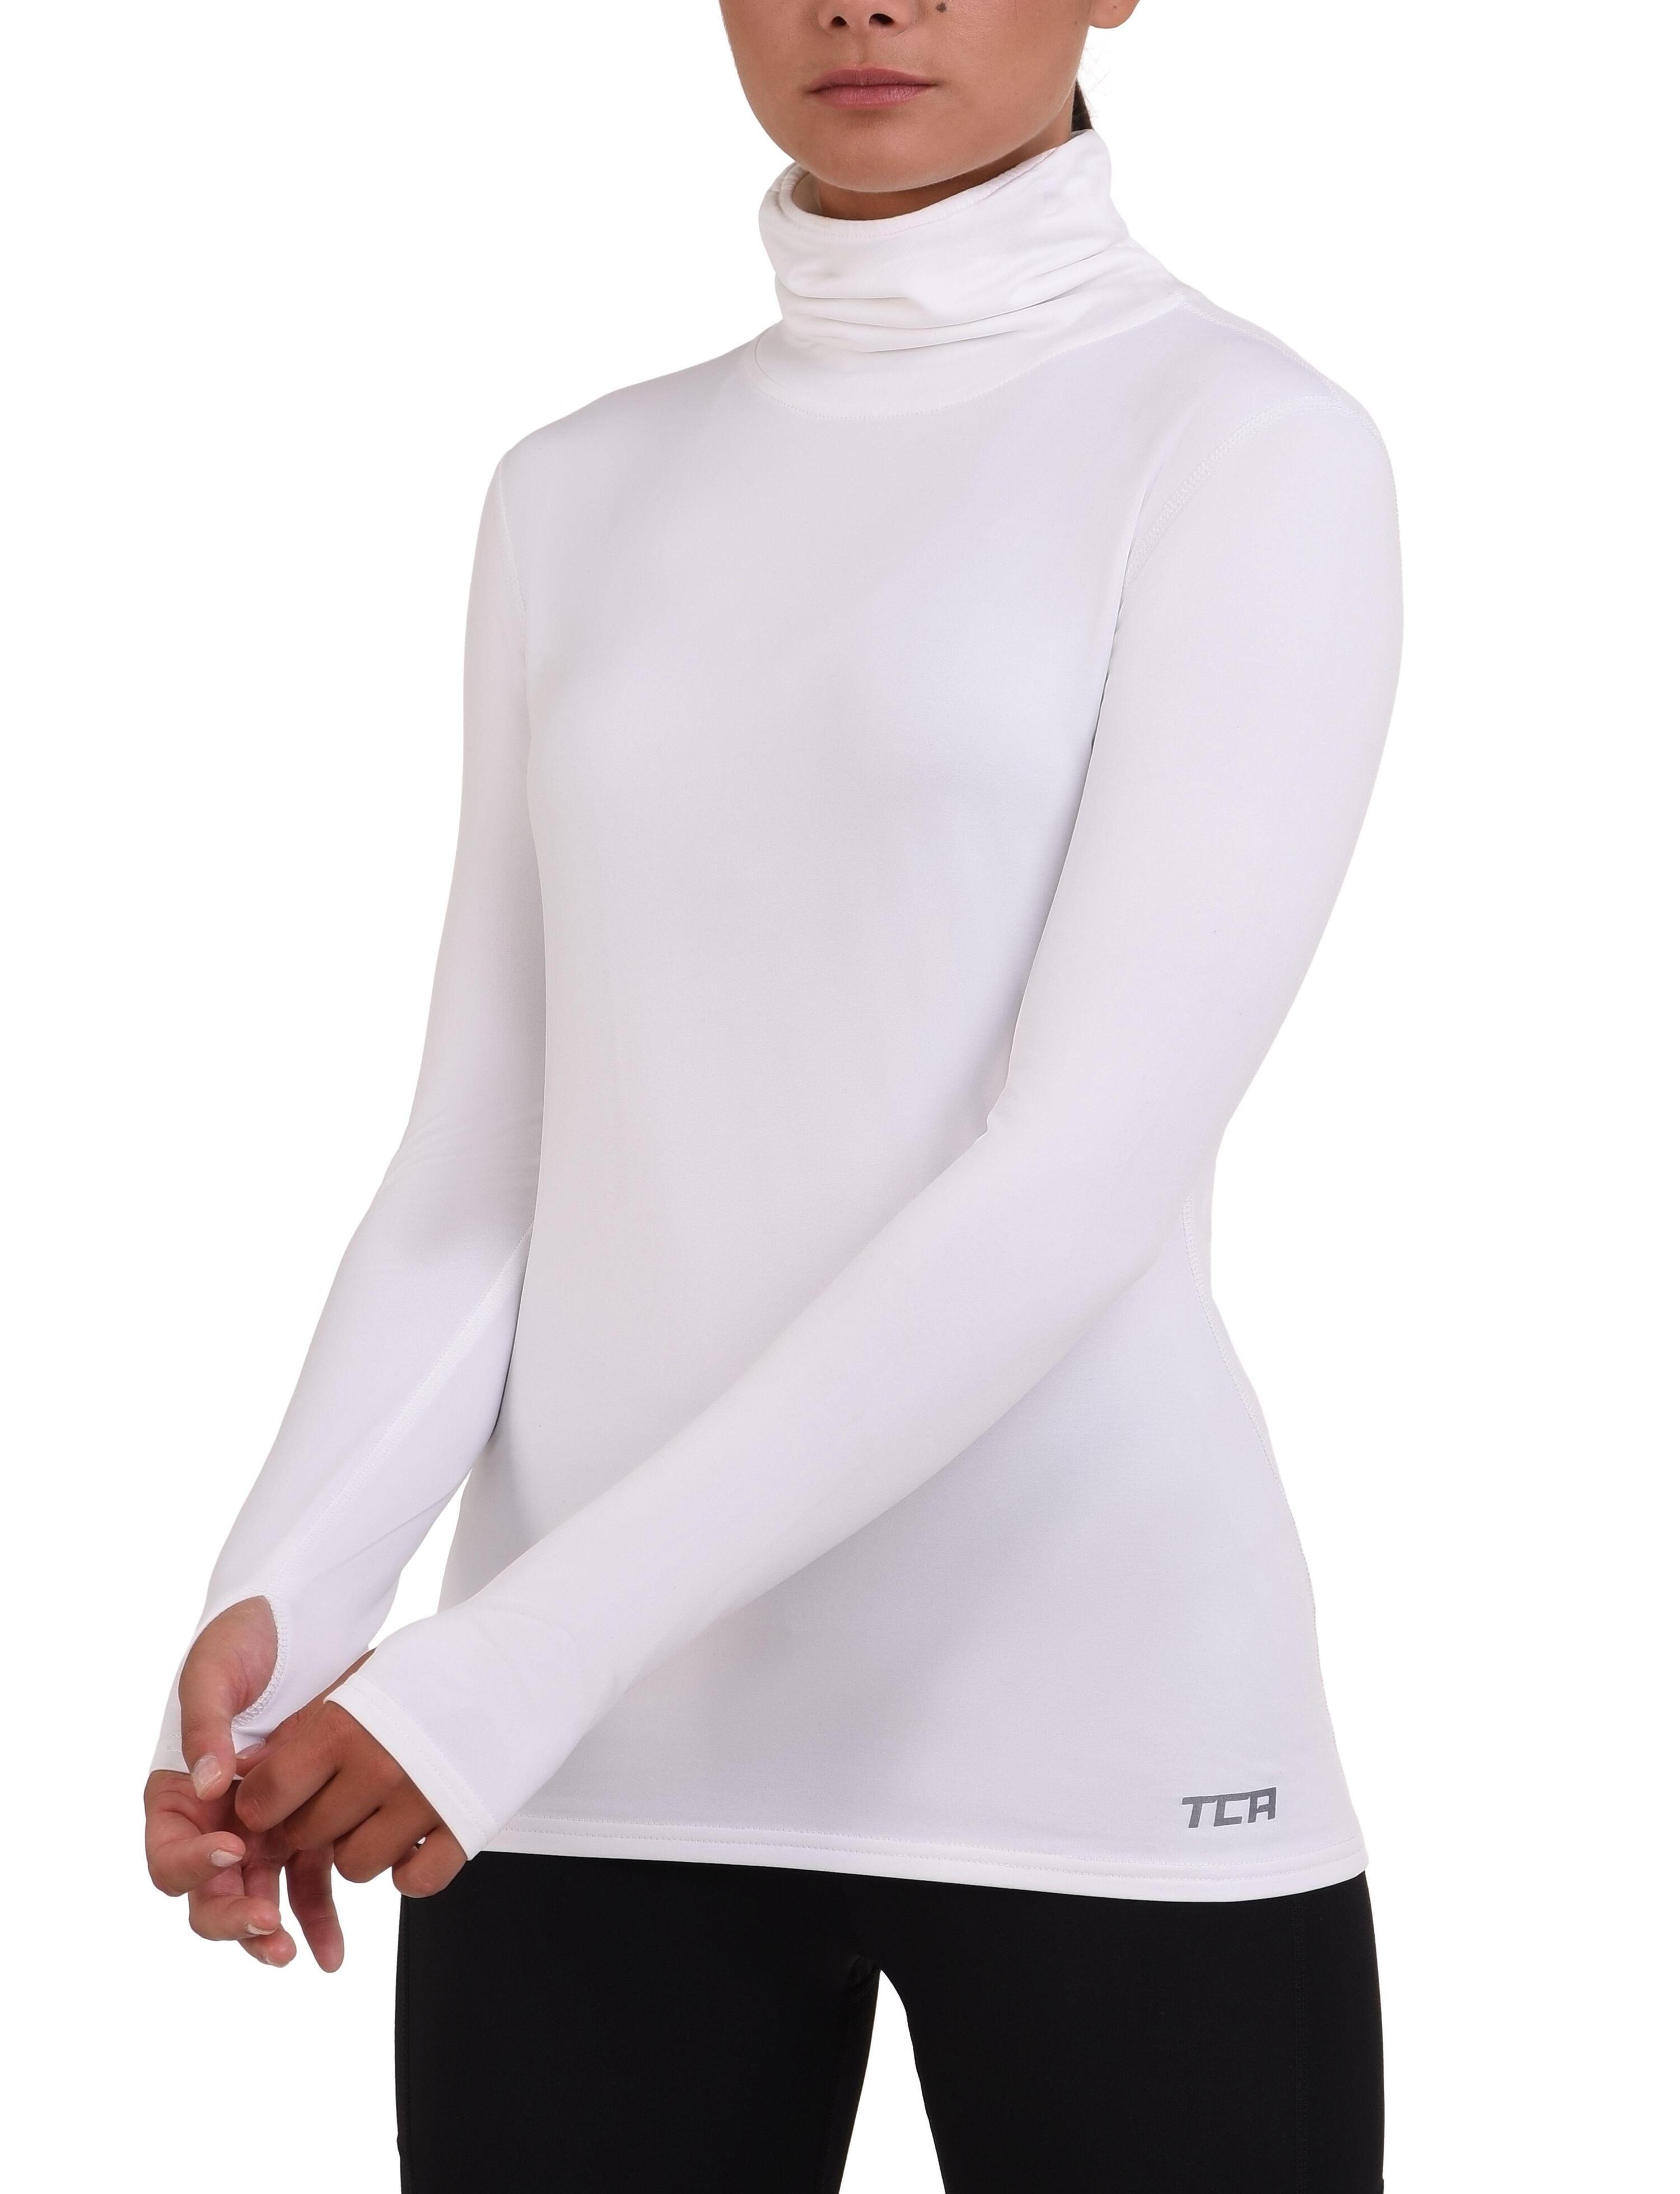 TCA Women's Thermal Funnel Neck Top - White